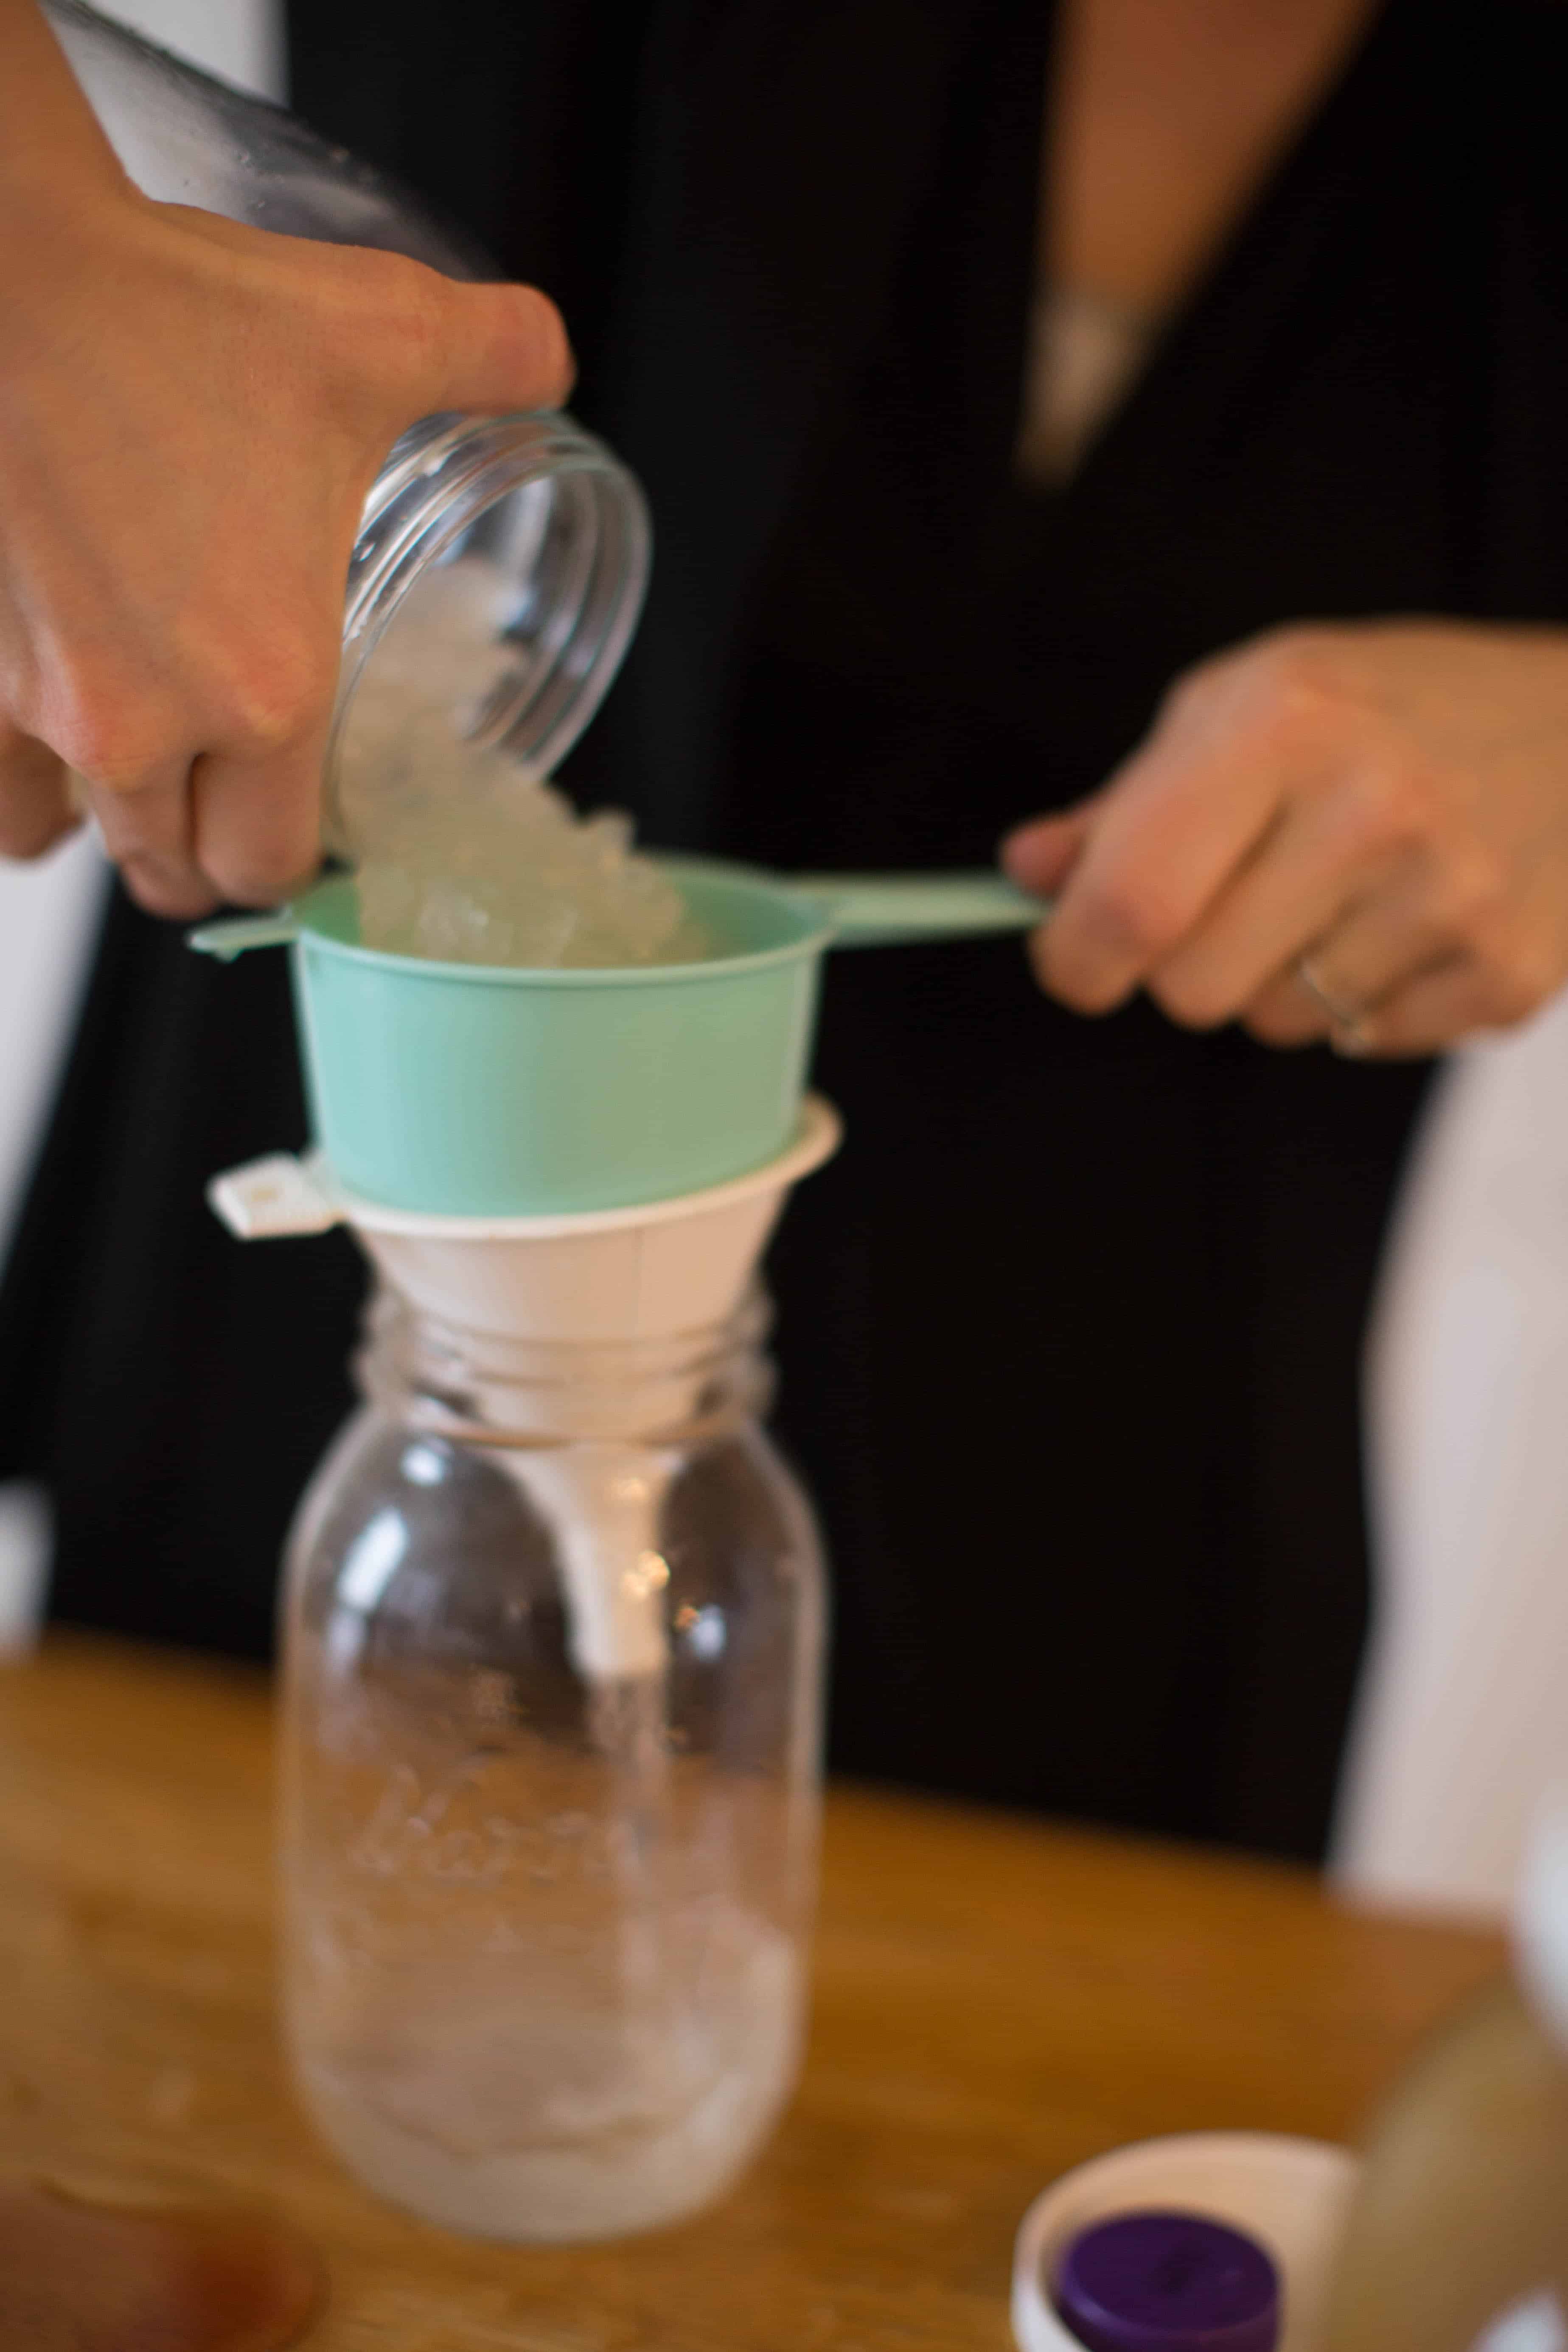 Straining water kefir grains into glass mason jar.